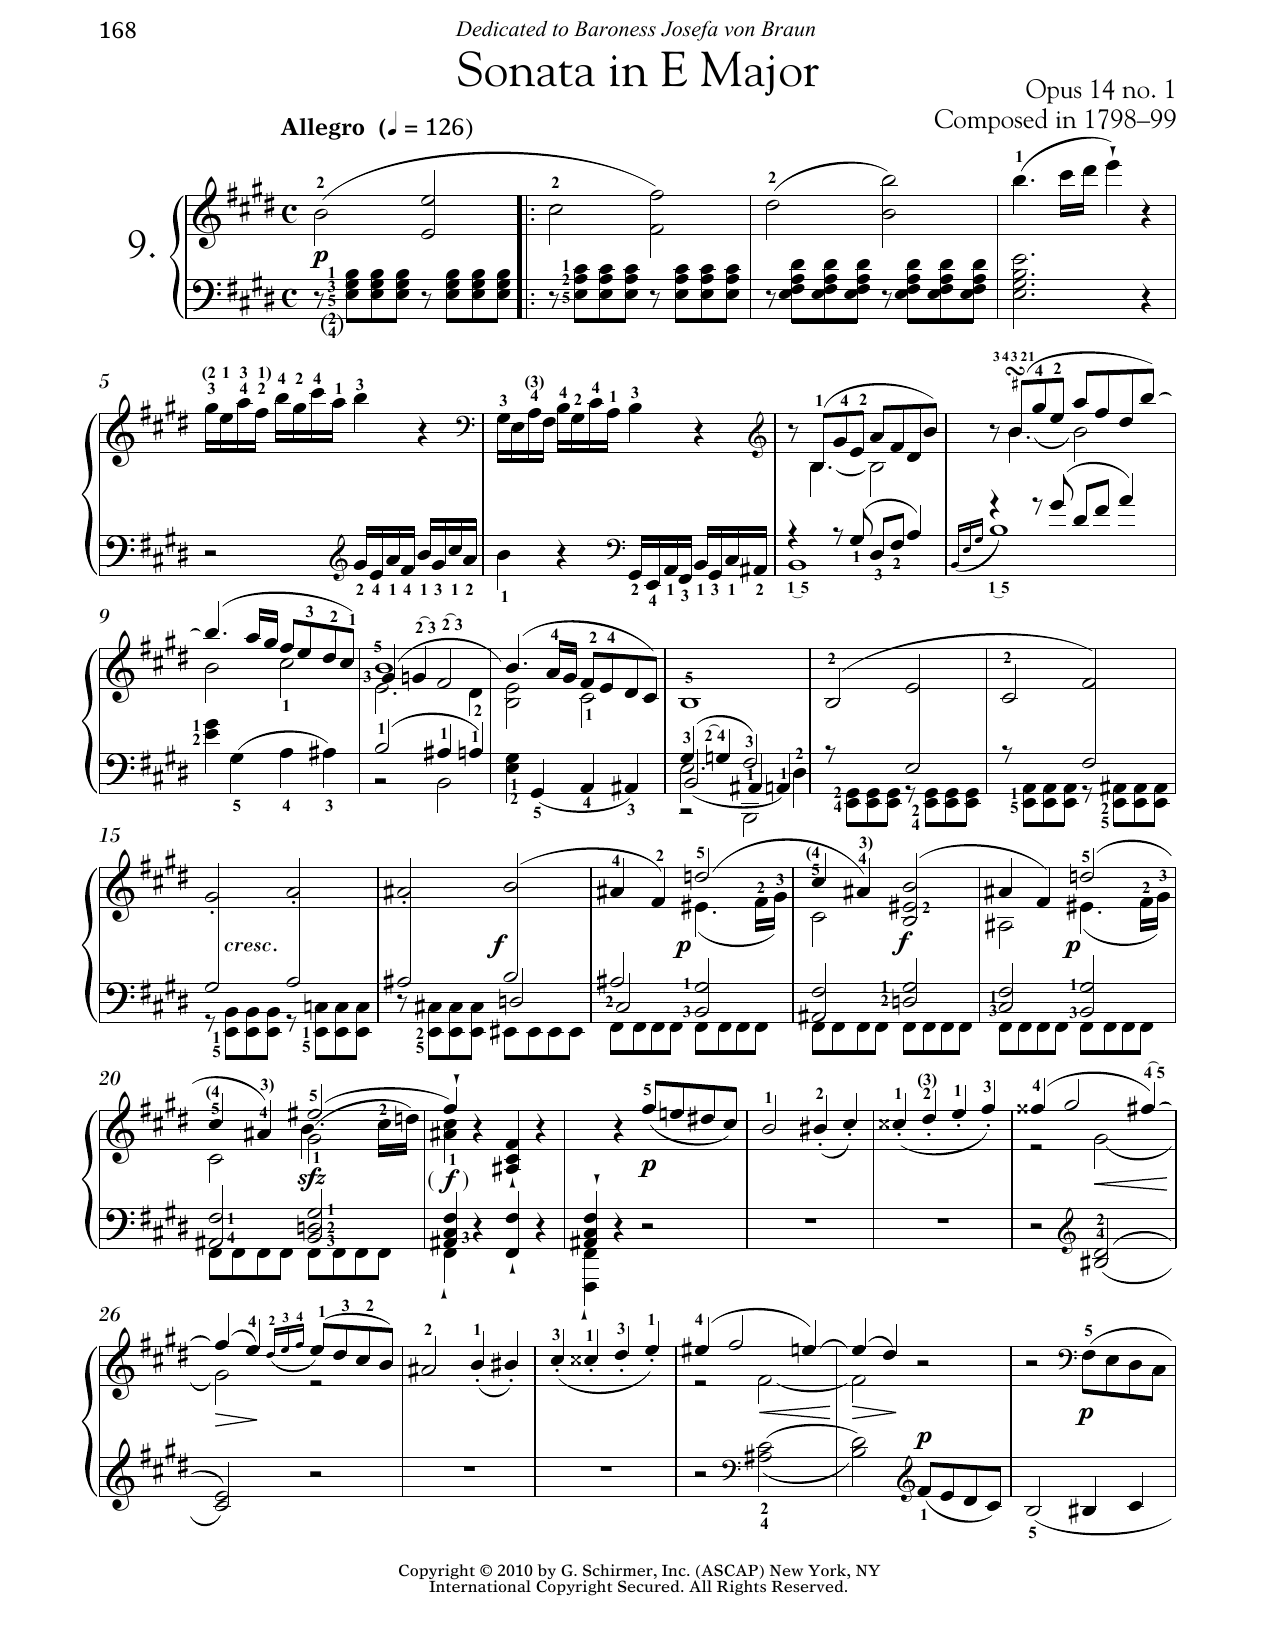 Ludwig van Beethoven Piano Sonata No. 9 In E Major, Op. 14, No. 1 Sheet Music Notes & Chords for Piano - Download or Print PDF